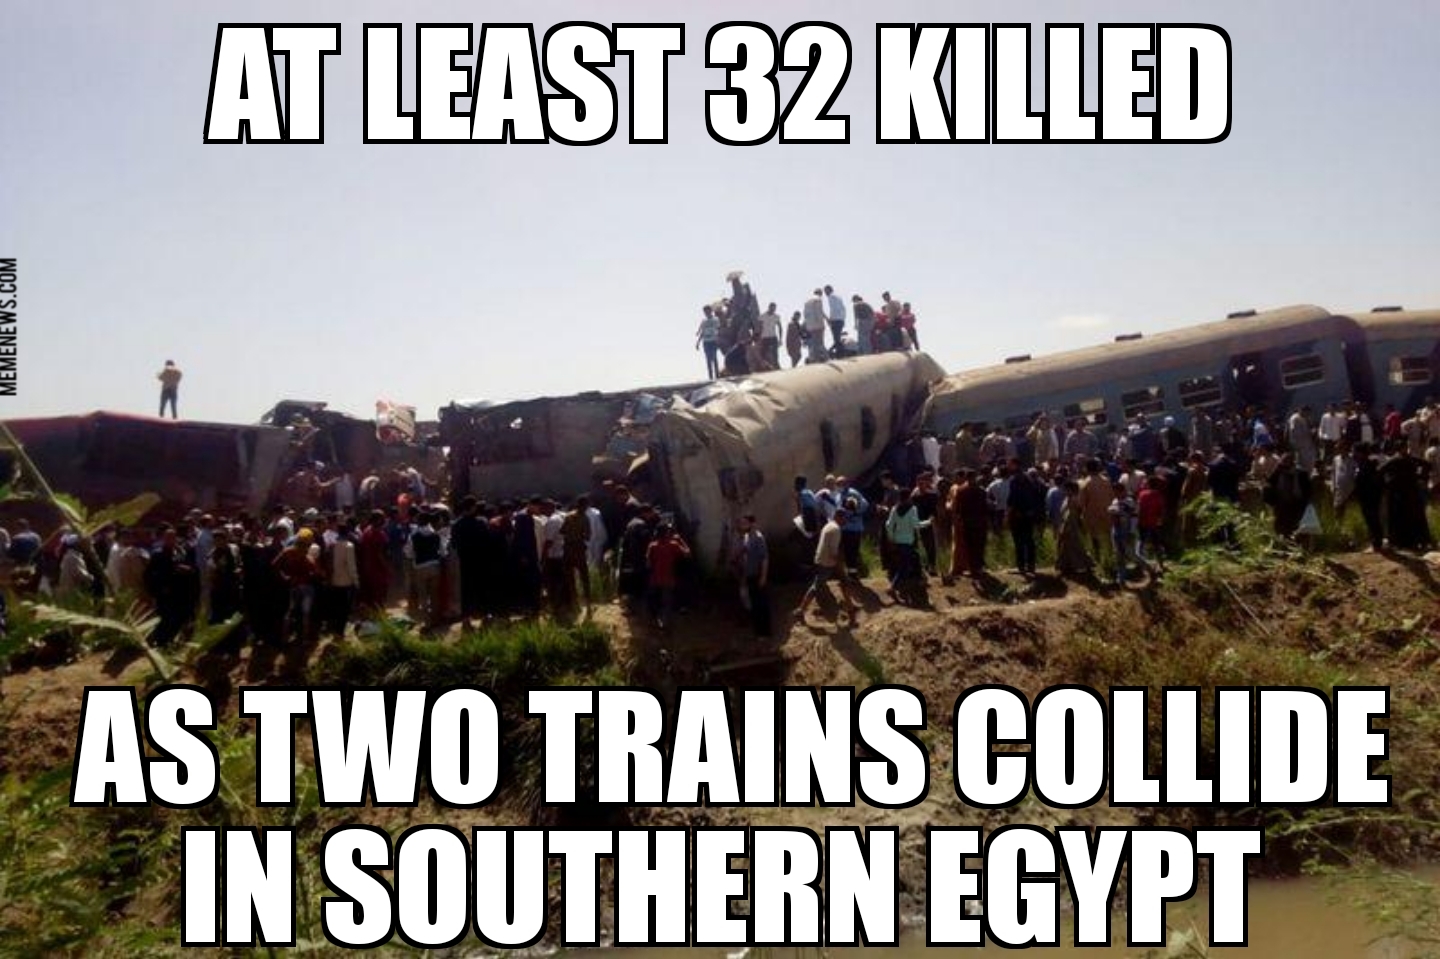 Southern Egypt train collision